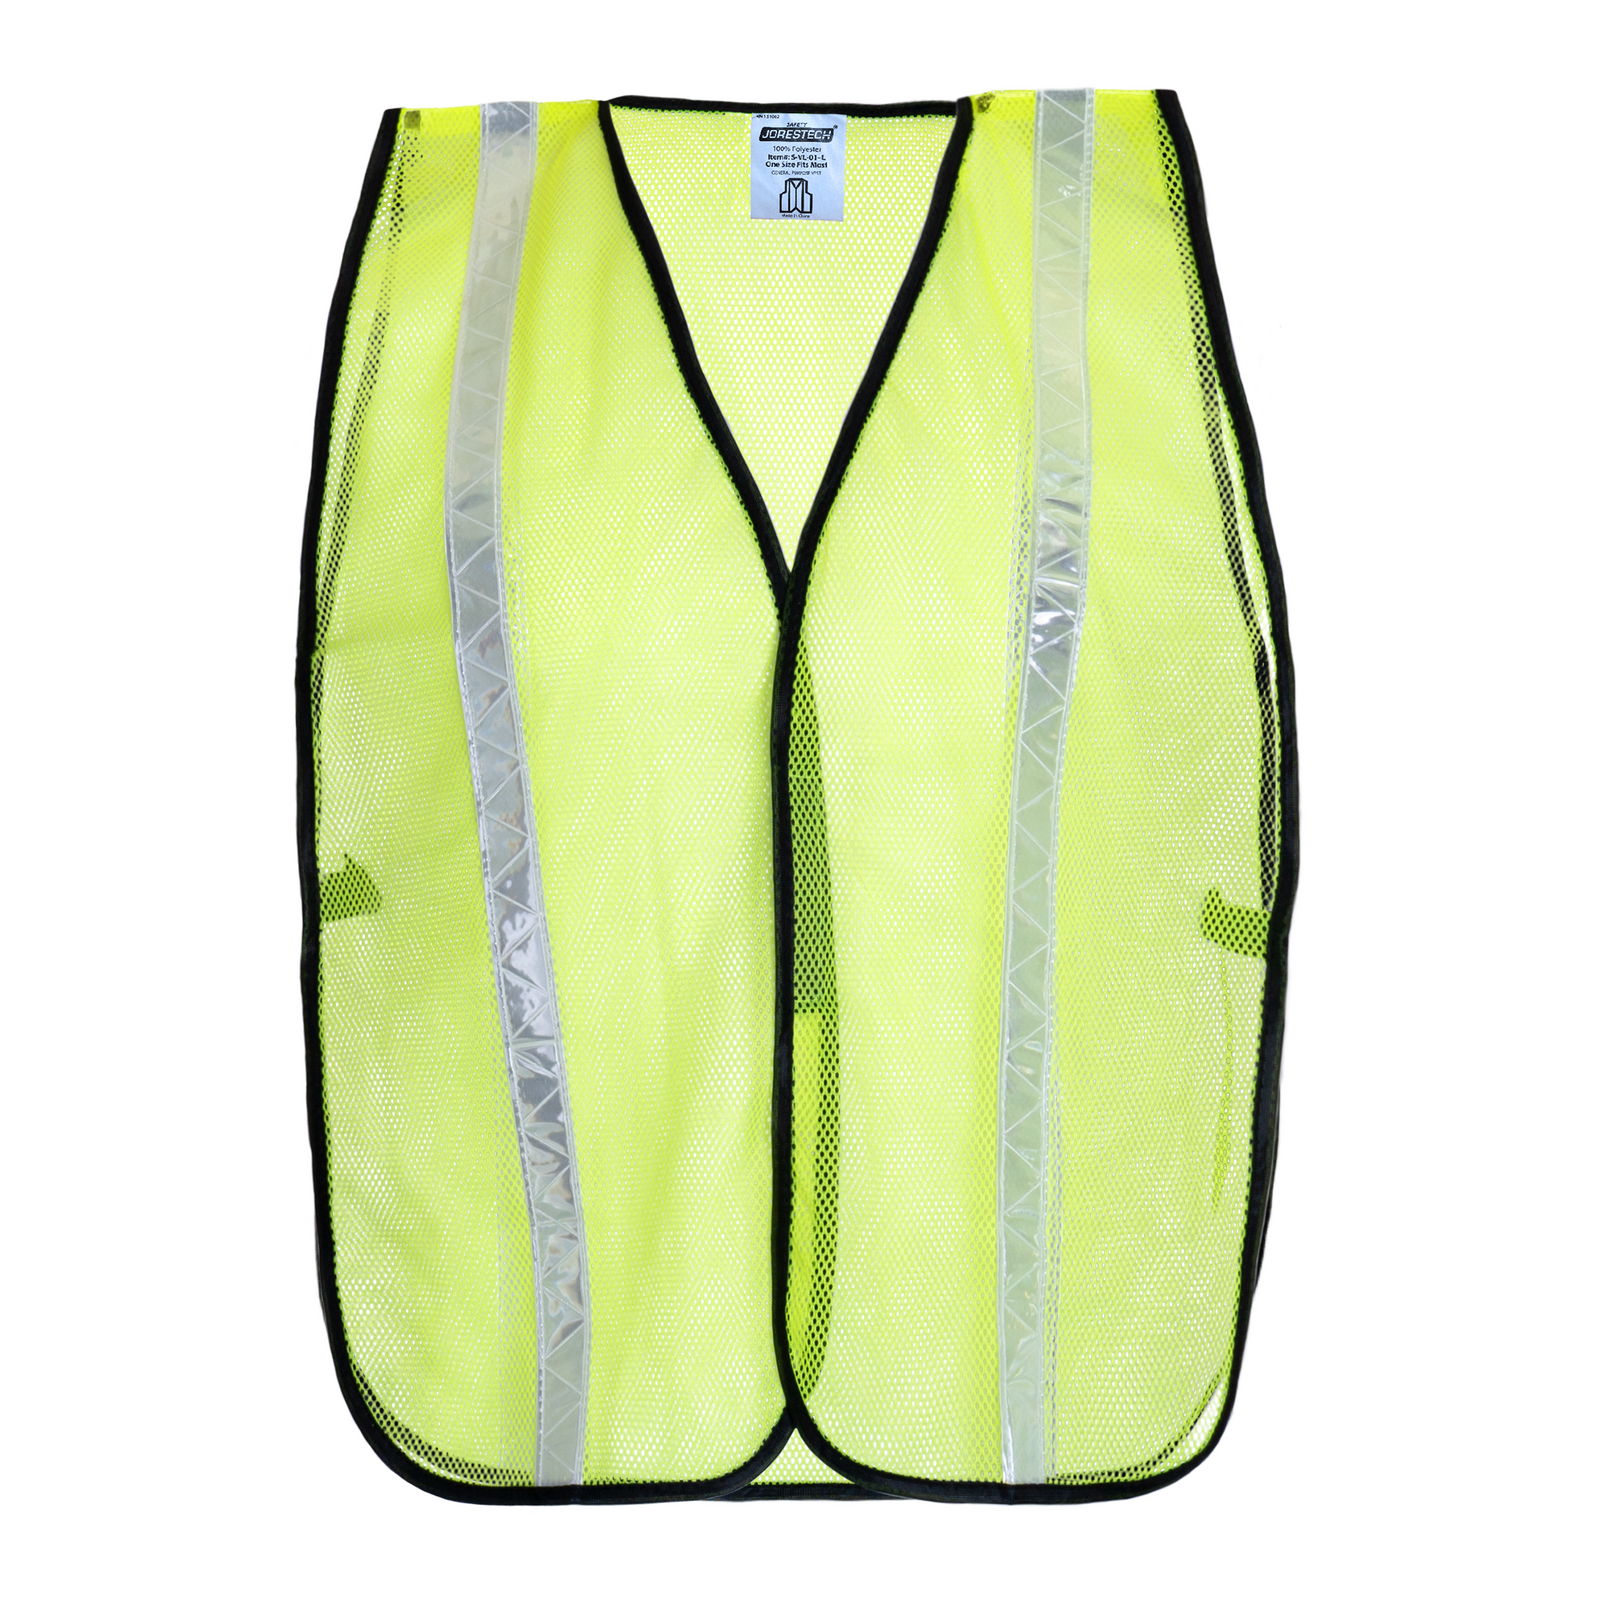 JORESTECH Emergency Safety Vest Lime Yellow (One Vest)